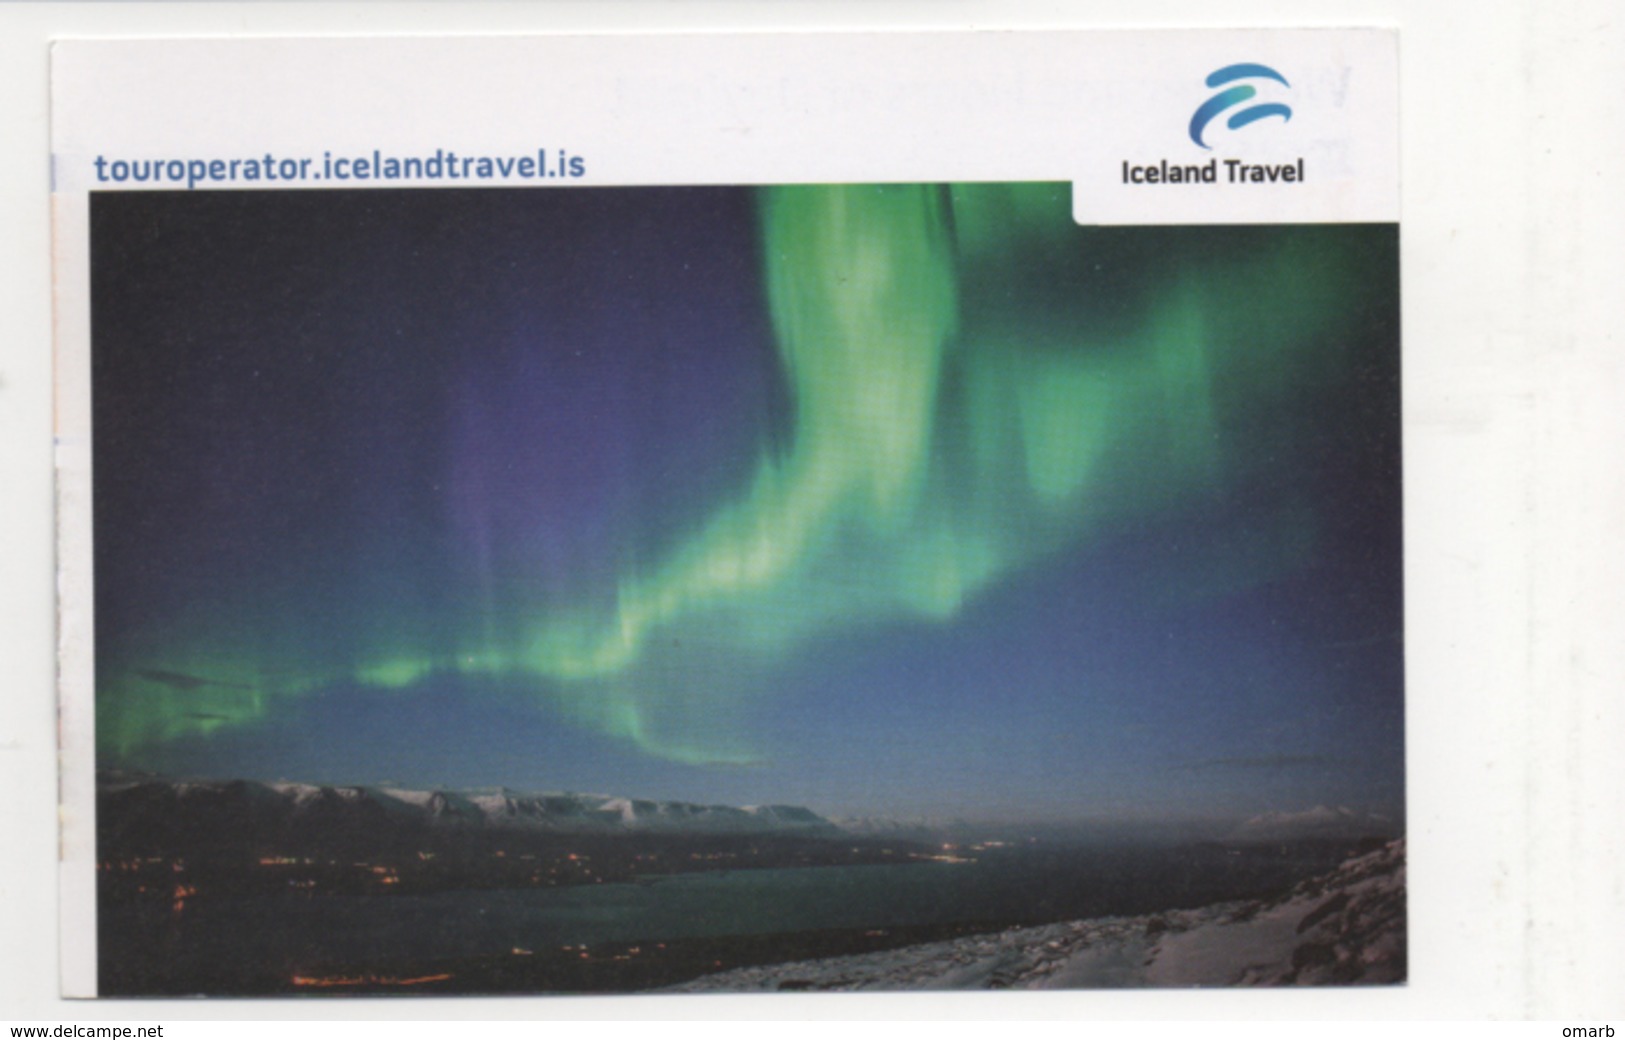 Fre392 Freecard Promotional Travel Tourism Iceland Islanda Paesaggio Natura Aurora Boreale Northern Lights - Islanda